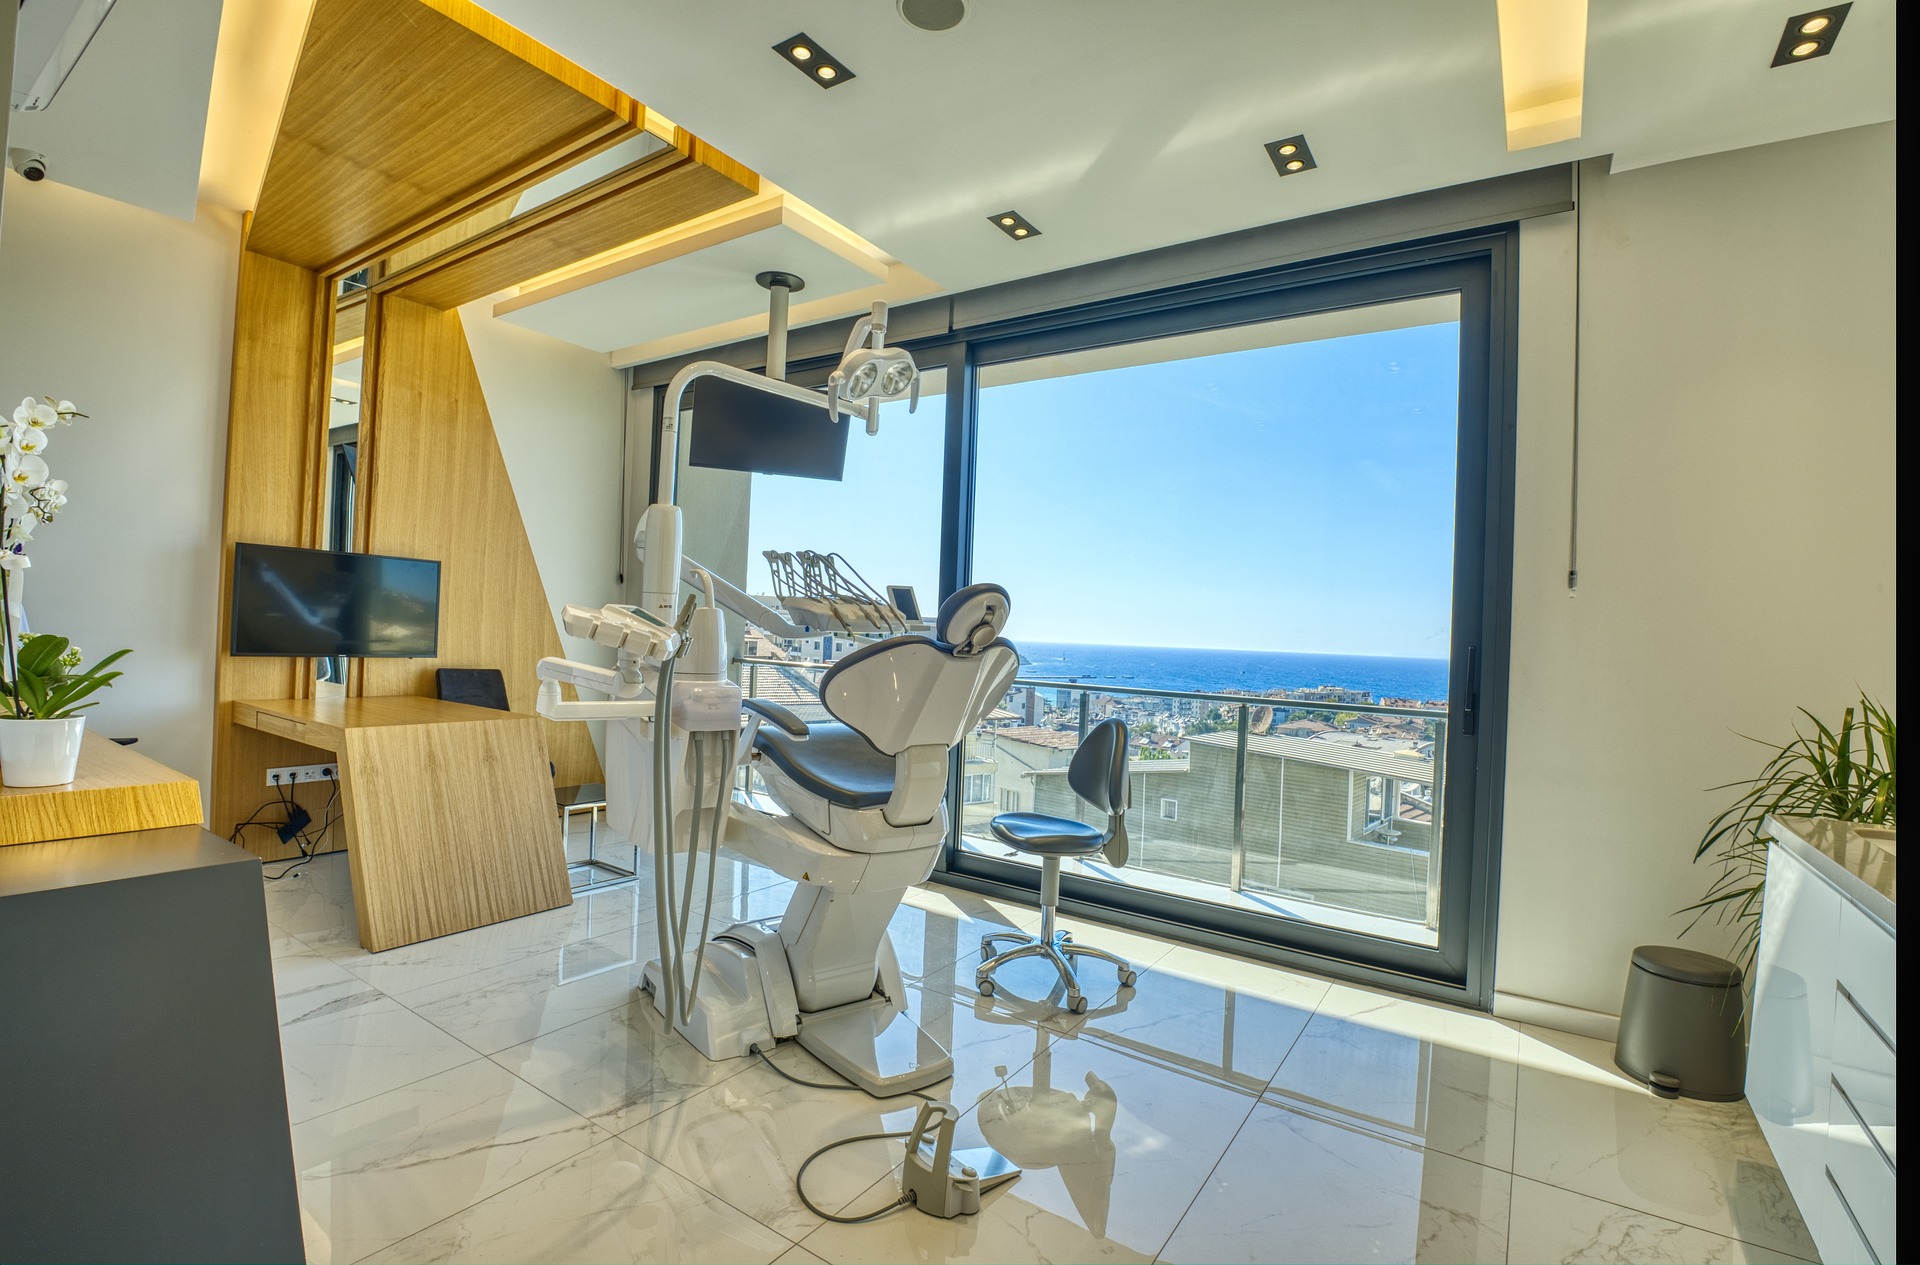 Transformacija stomatoloških ordinacija uz dentify i Cloud tehnologiju